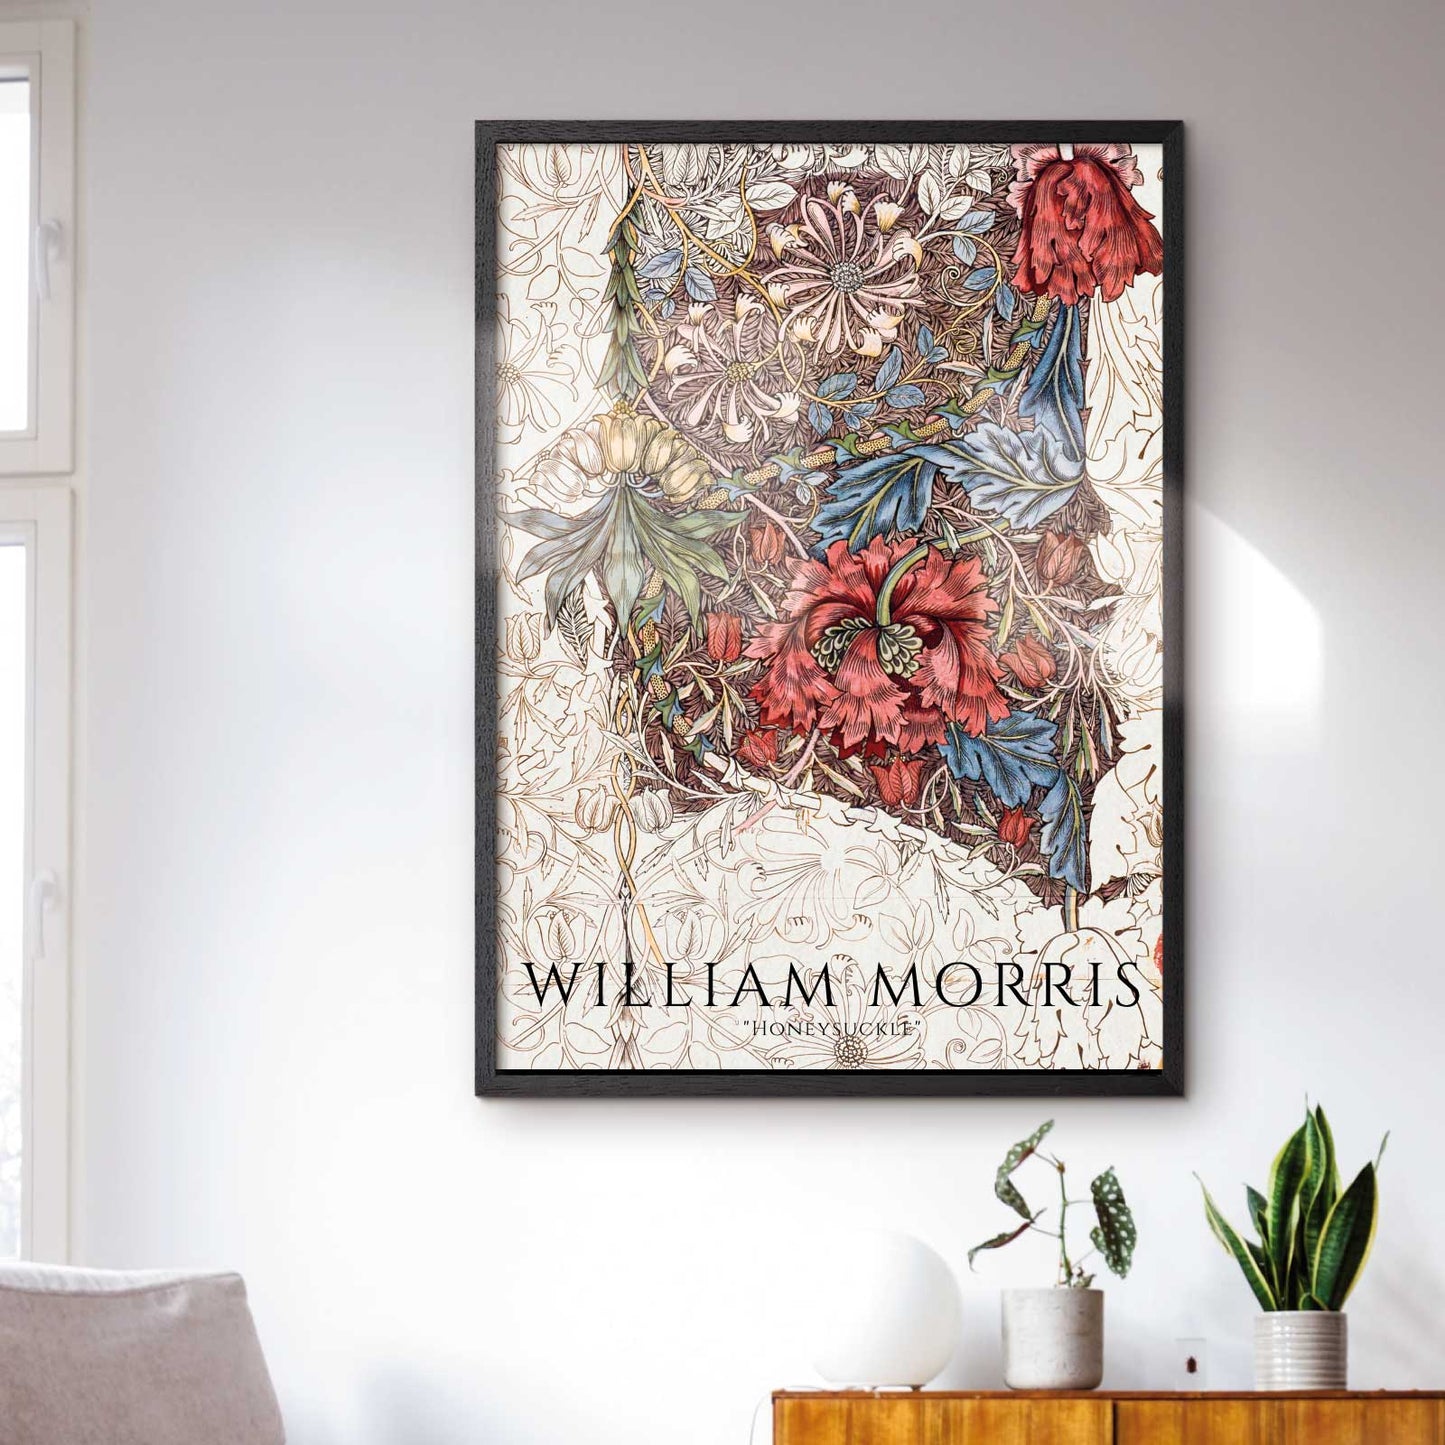 Art poster with William Morris "Honeysuckle"